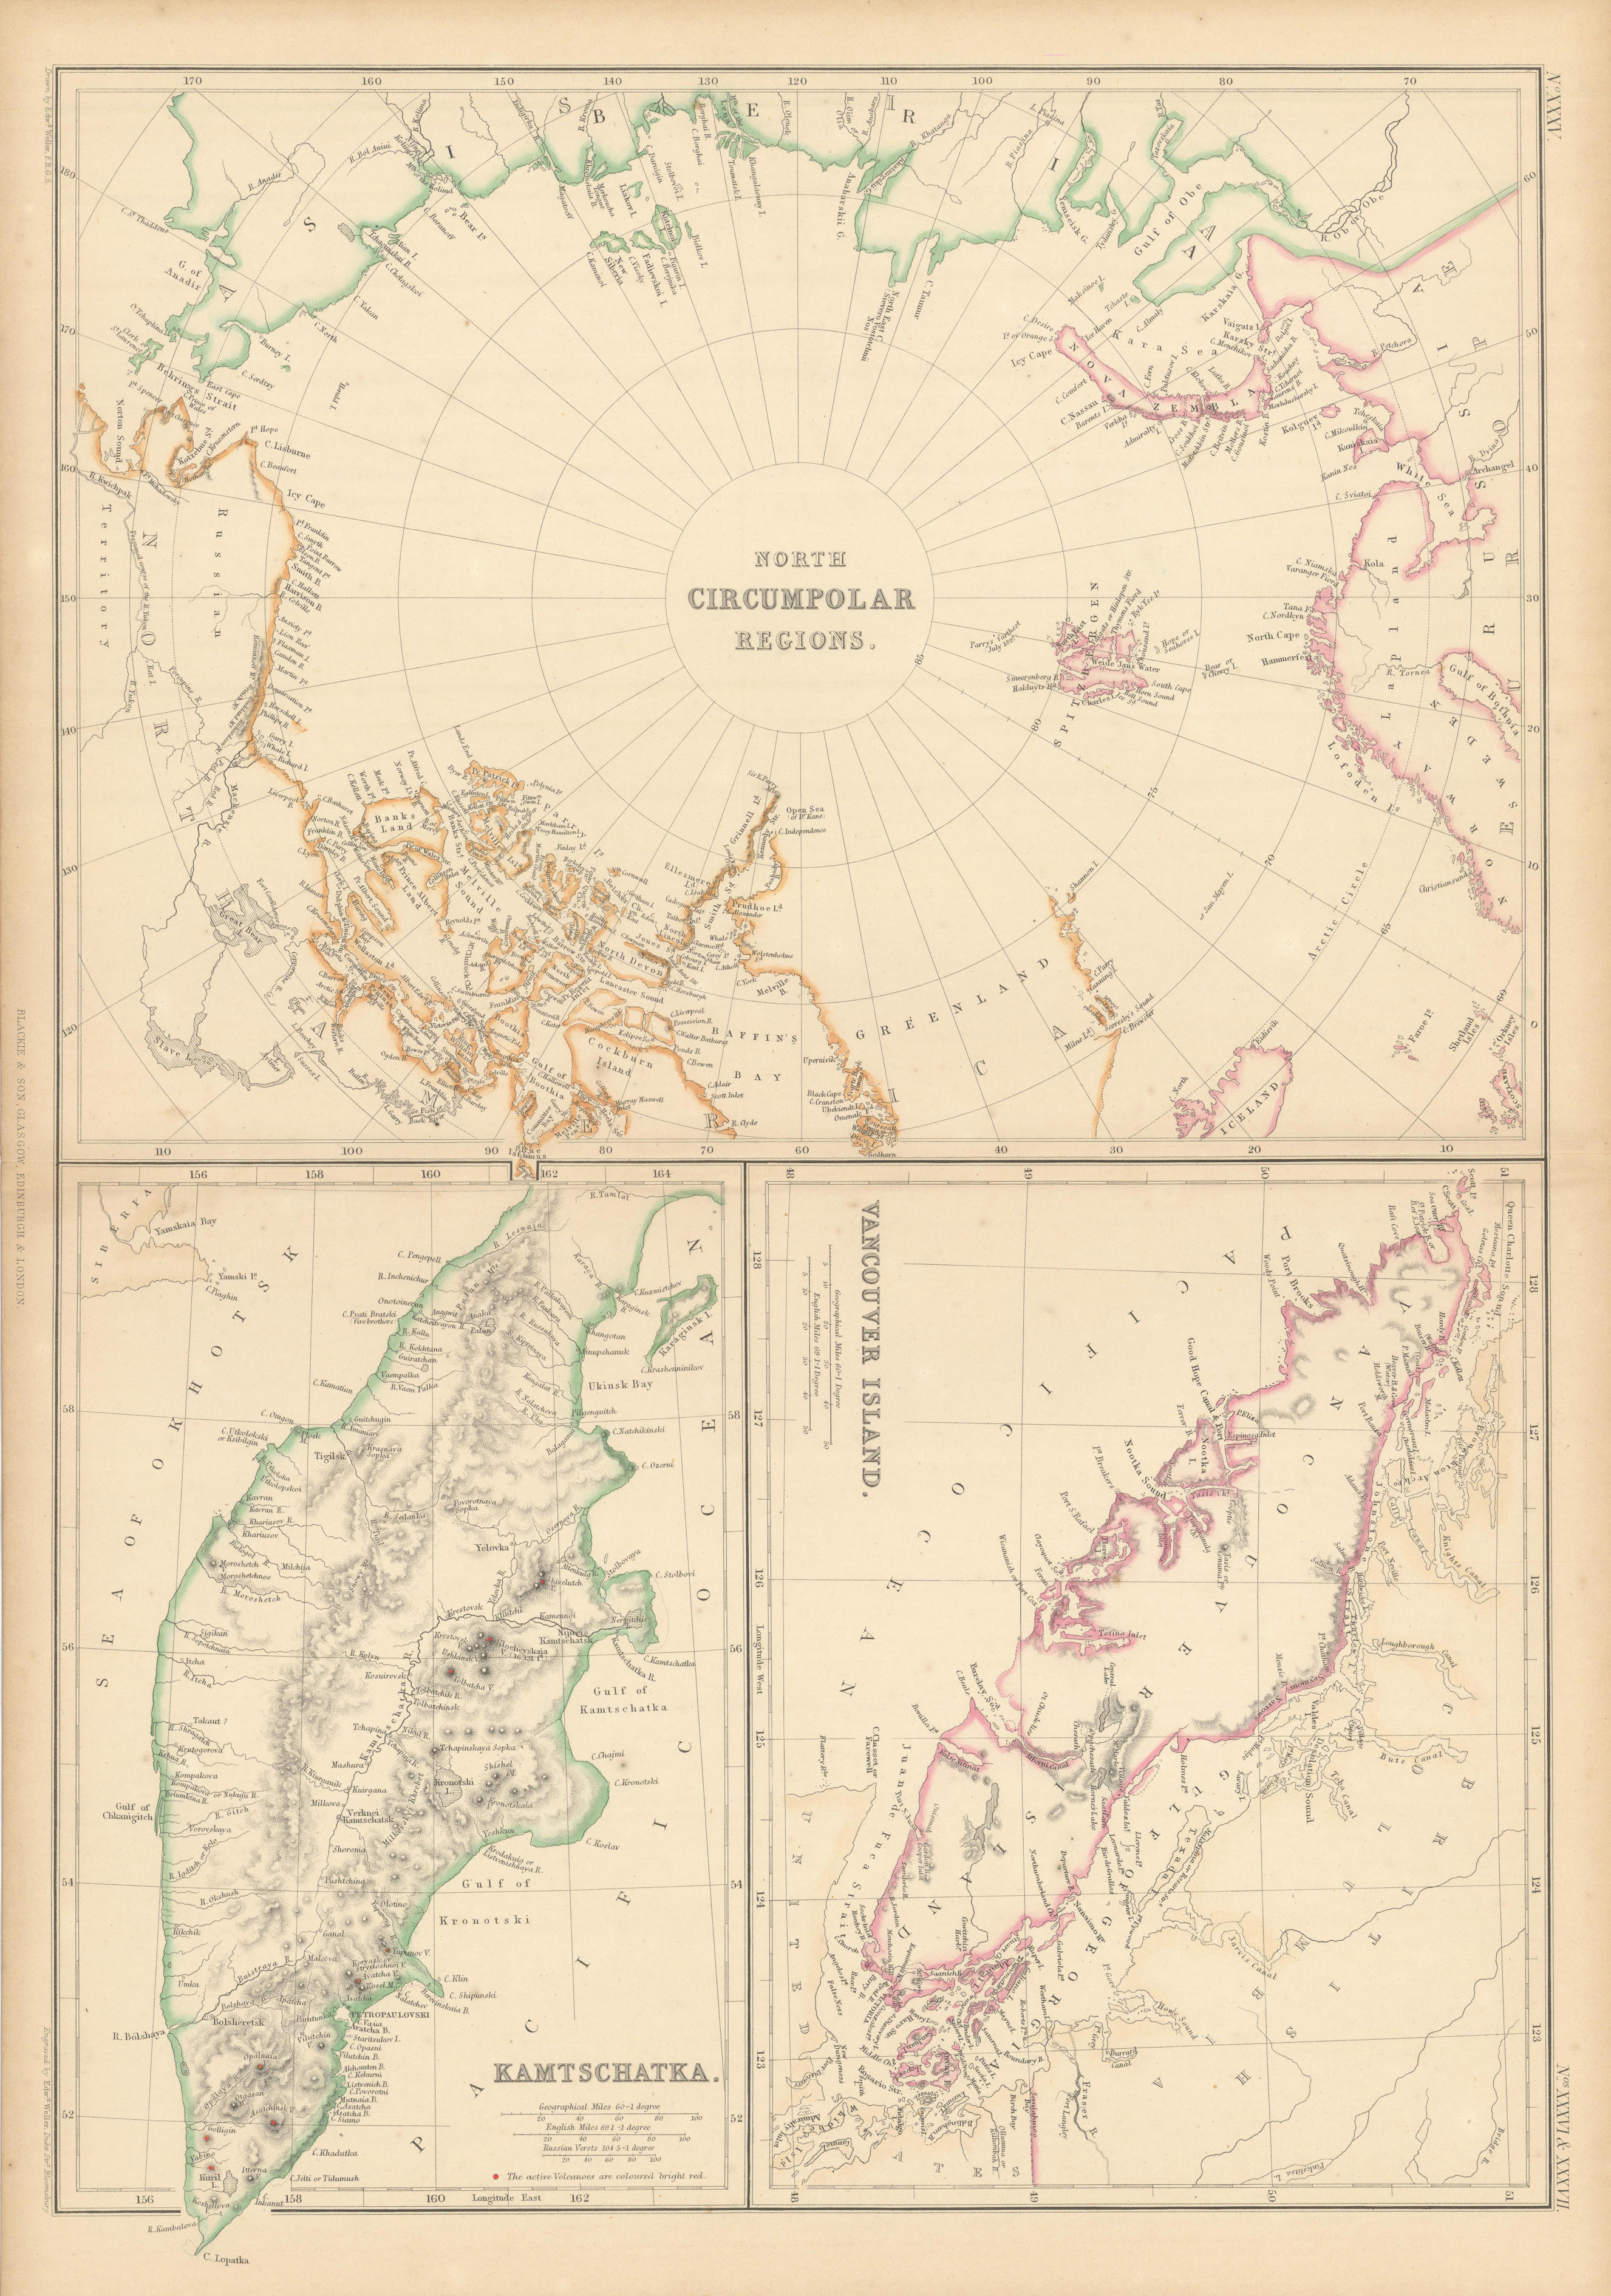 North Circumpolar Regions. Vancouver Island. Kamchatka volcanoes WELLER 1859 map